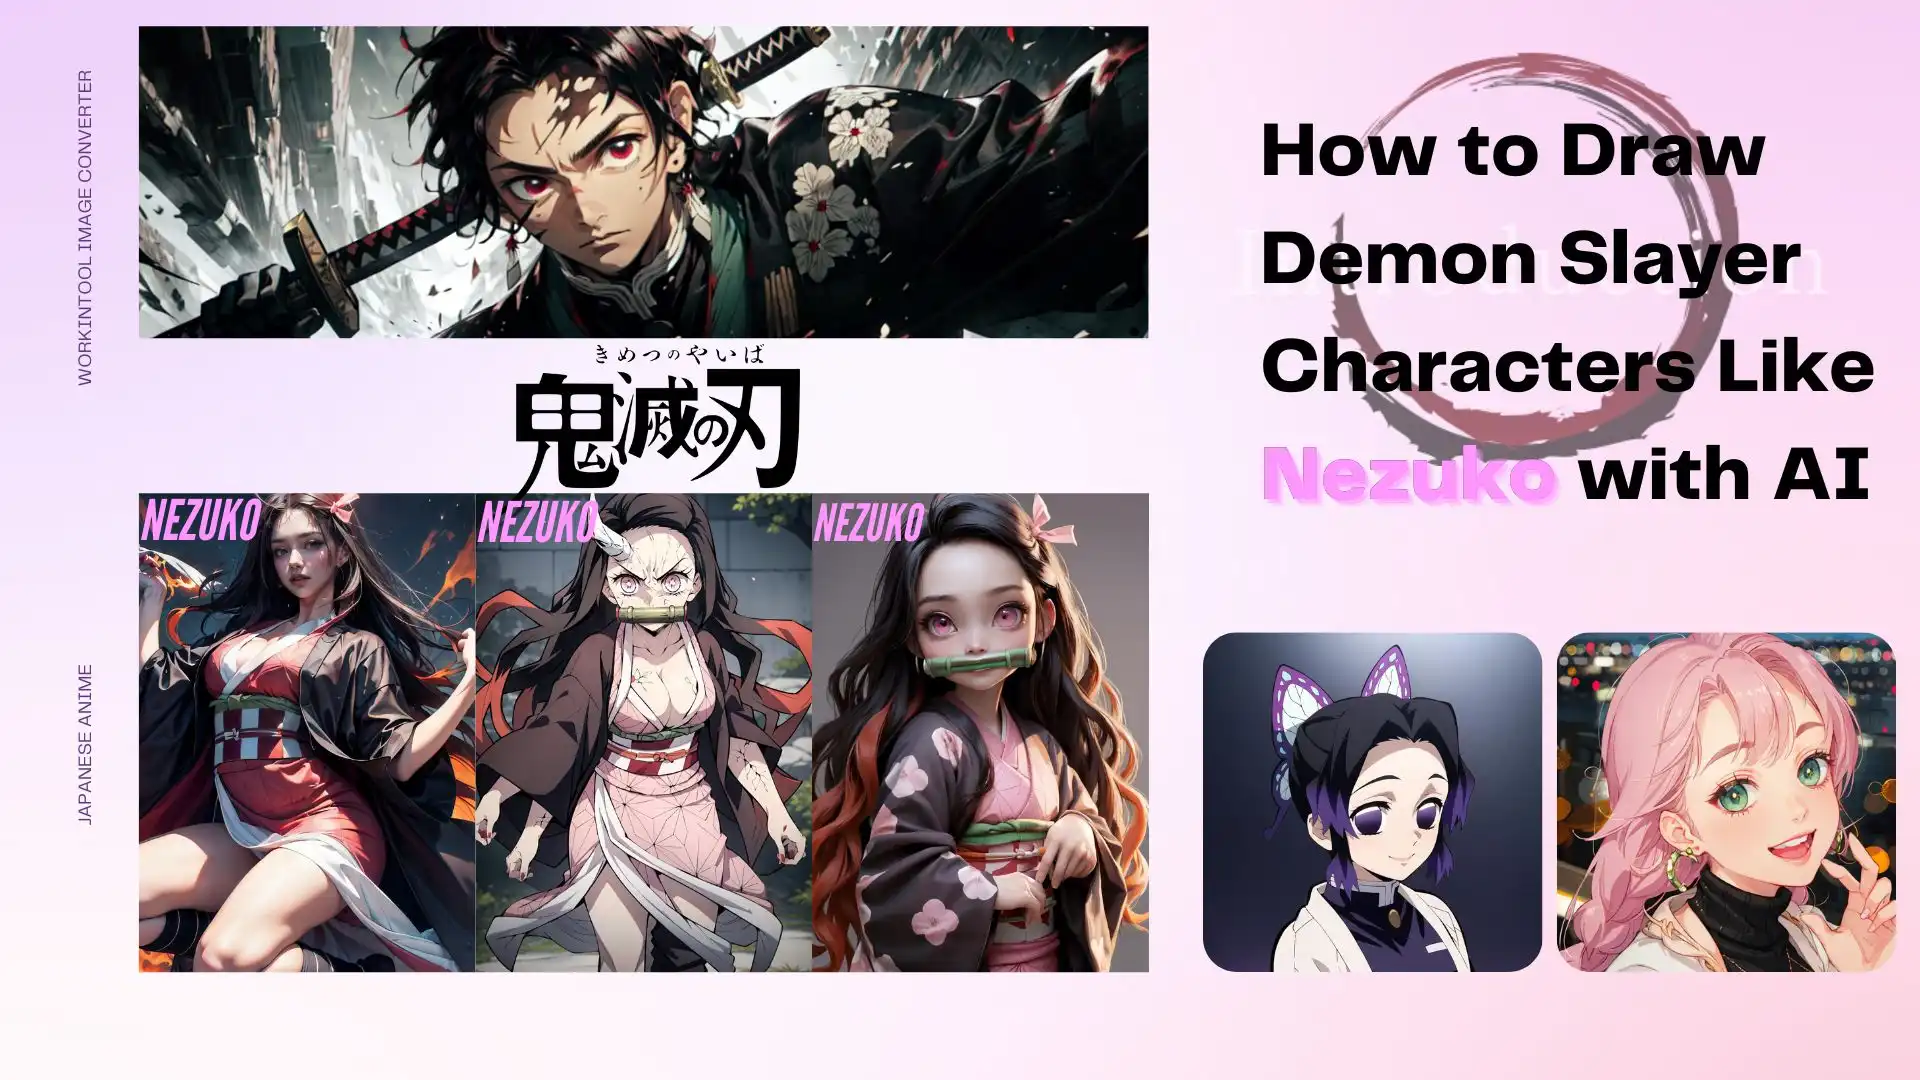 How to Draw Demon Slayer Characters Like Nezuko with AI